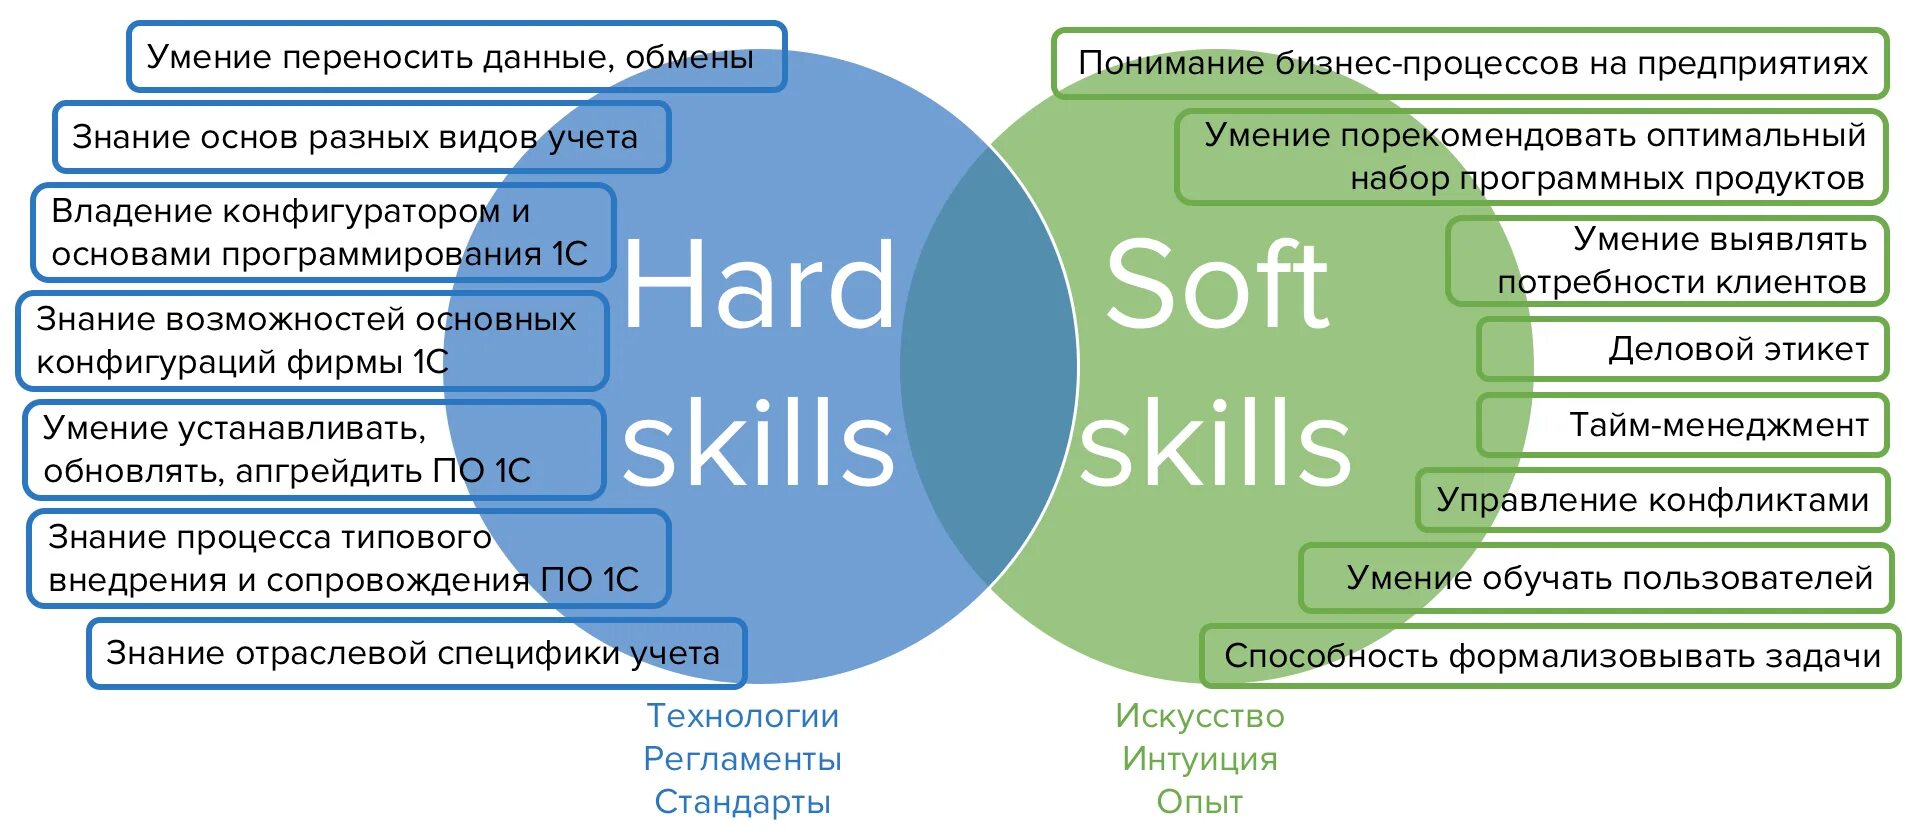 Hard skills и Soft skills. Навыки Хард и софт Скиллс. Компетенции педагога hard skills Soft skills. Софт и Хард компетенции. Necessary experience